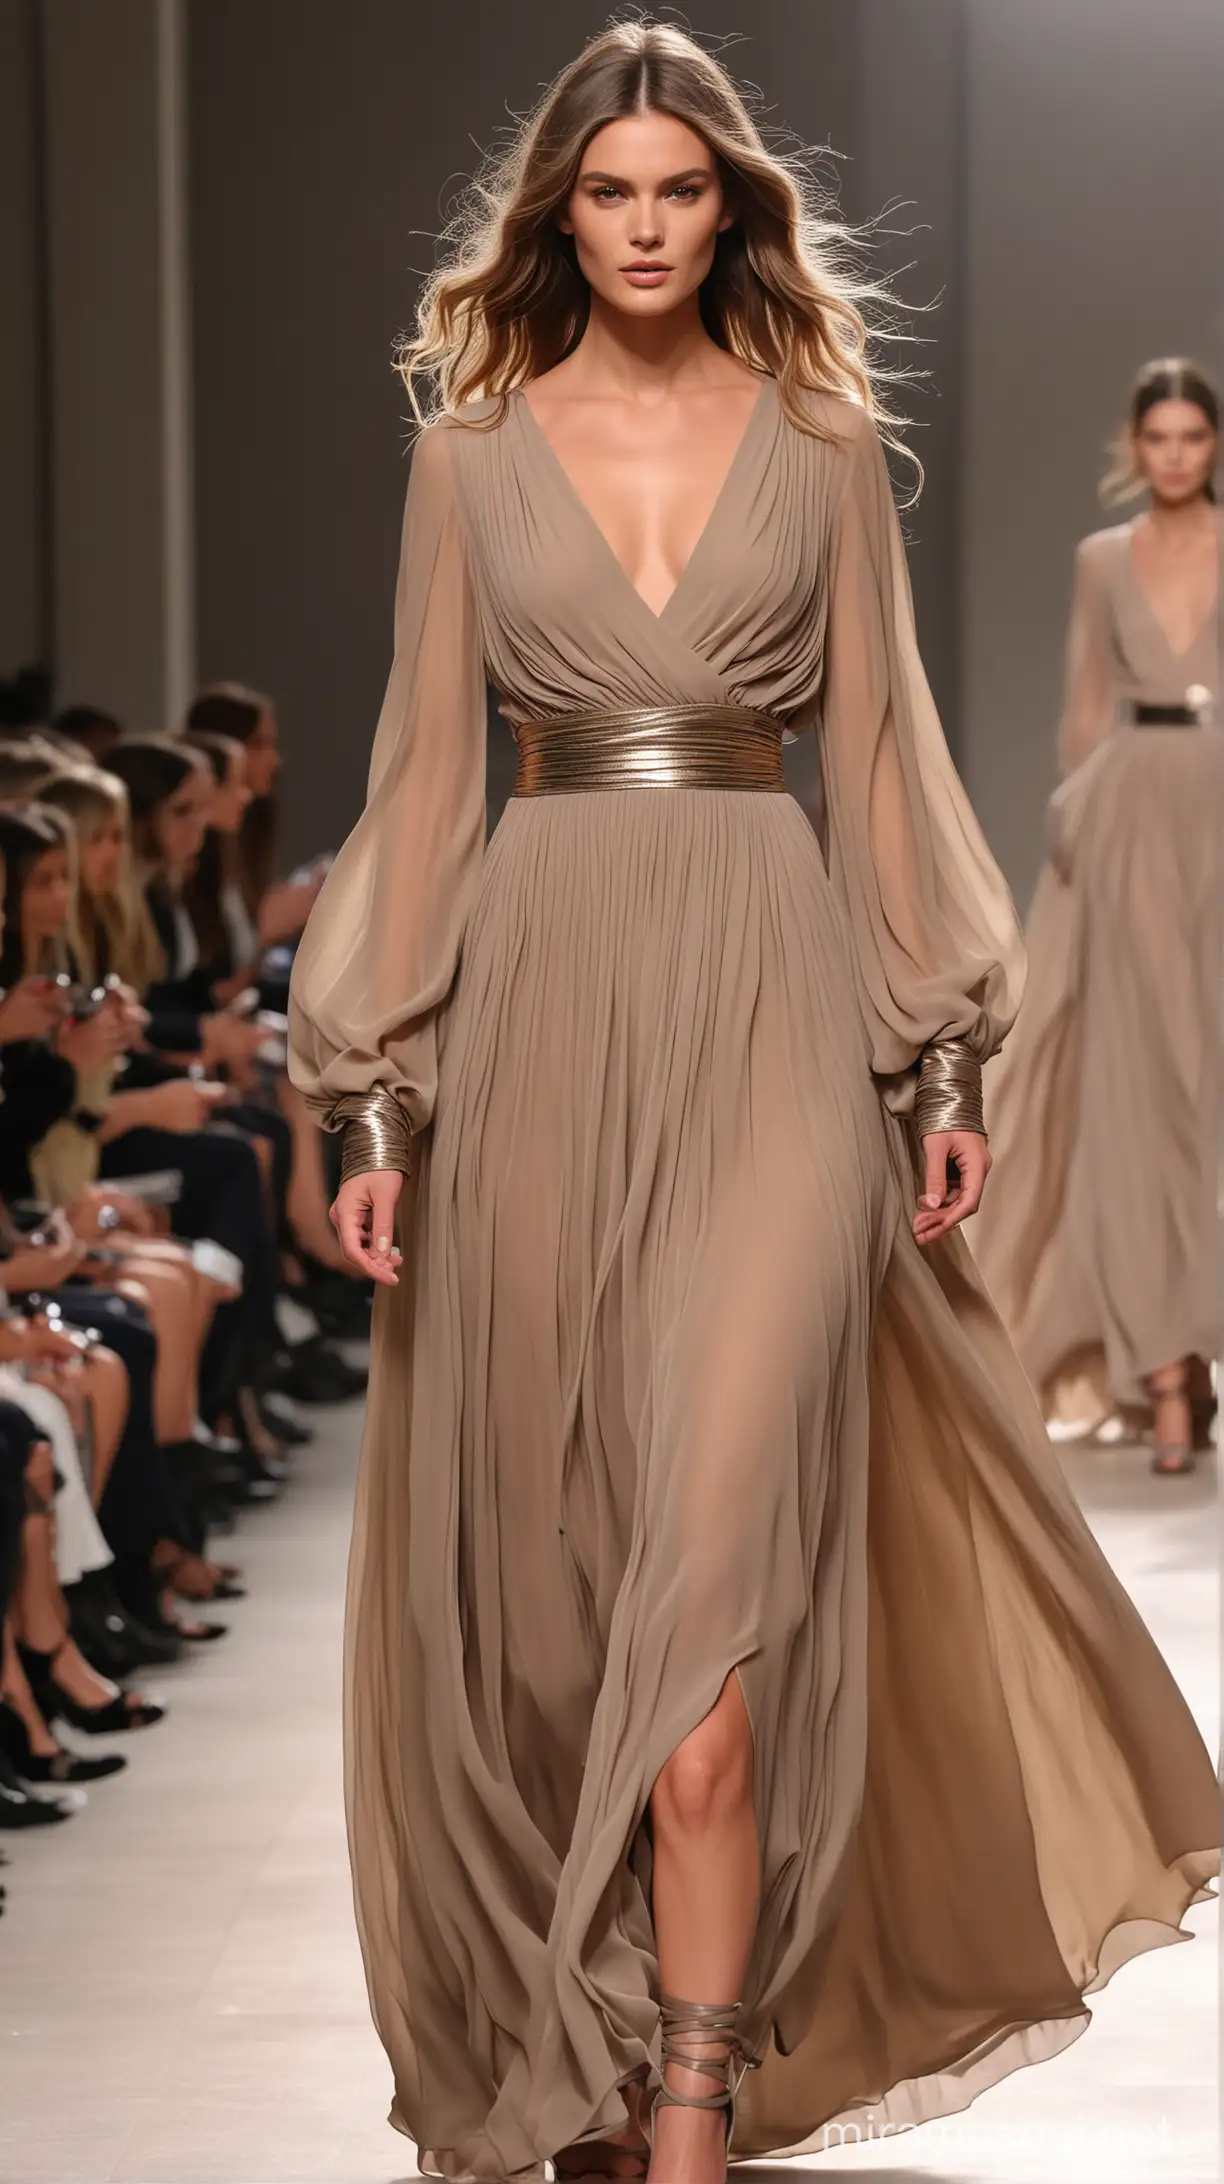 Glamorous Supermodel Strutting in FoilCoated Chiffon Dress